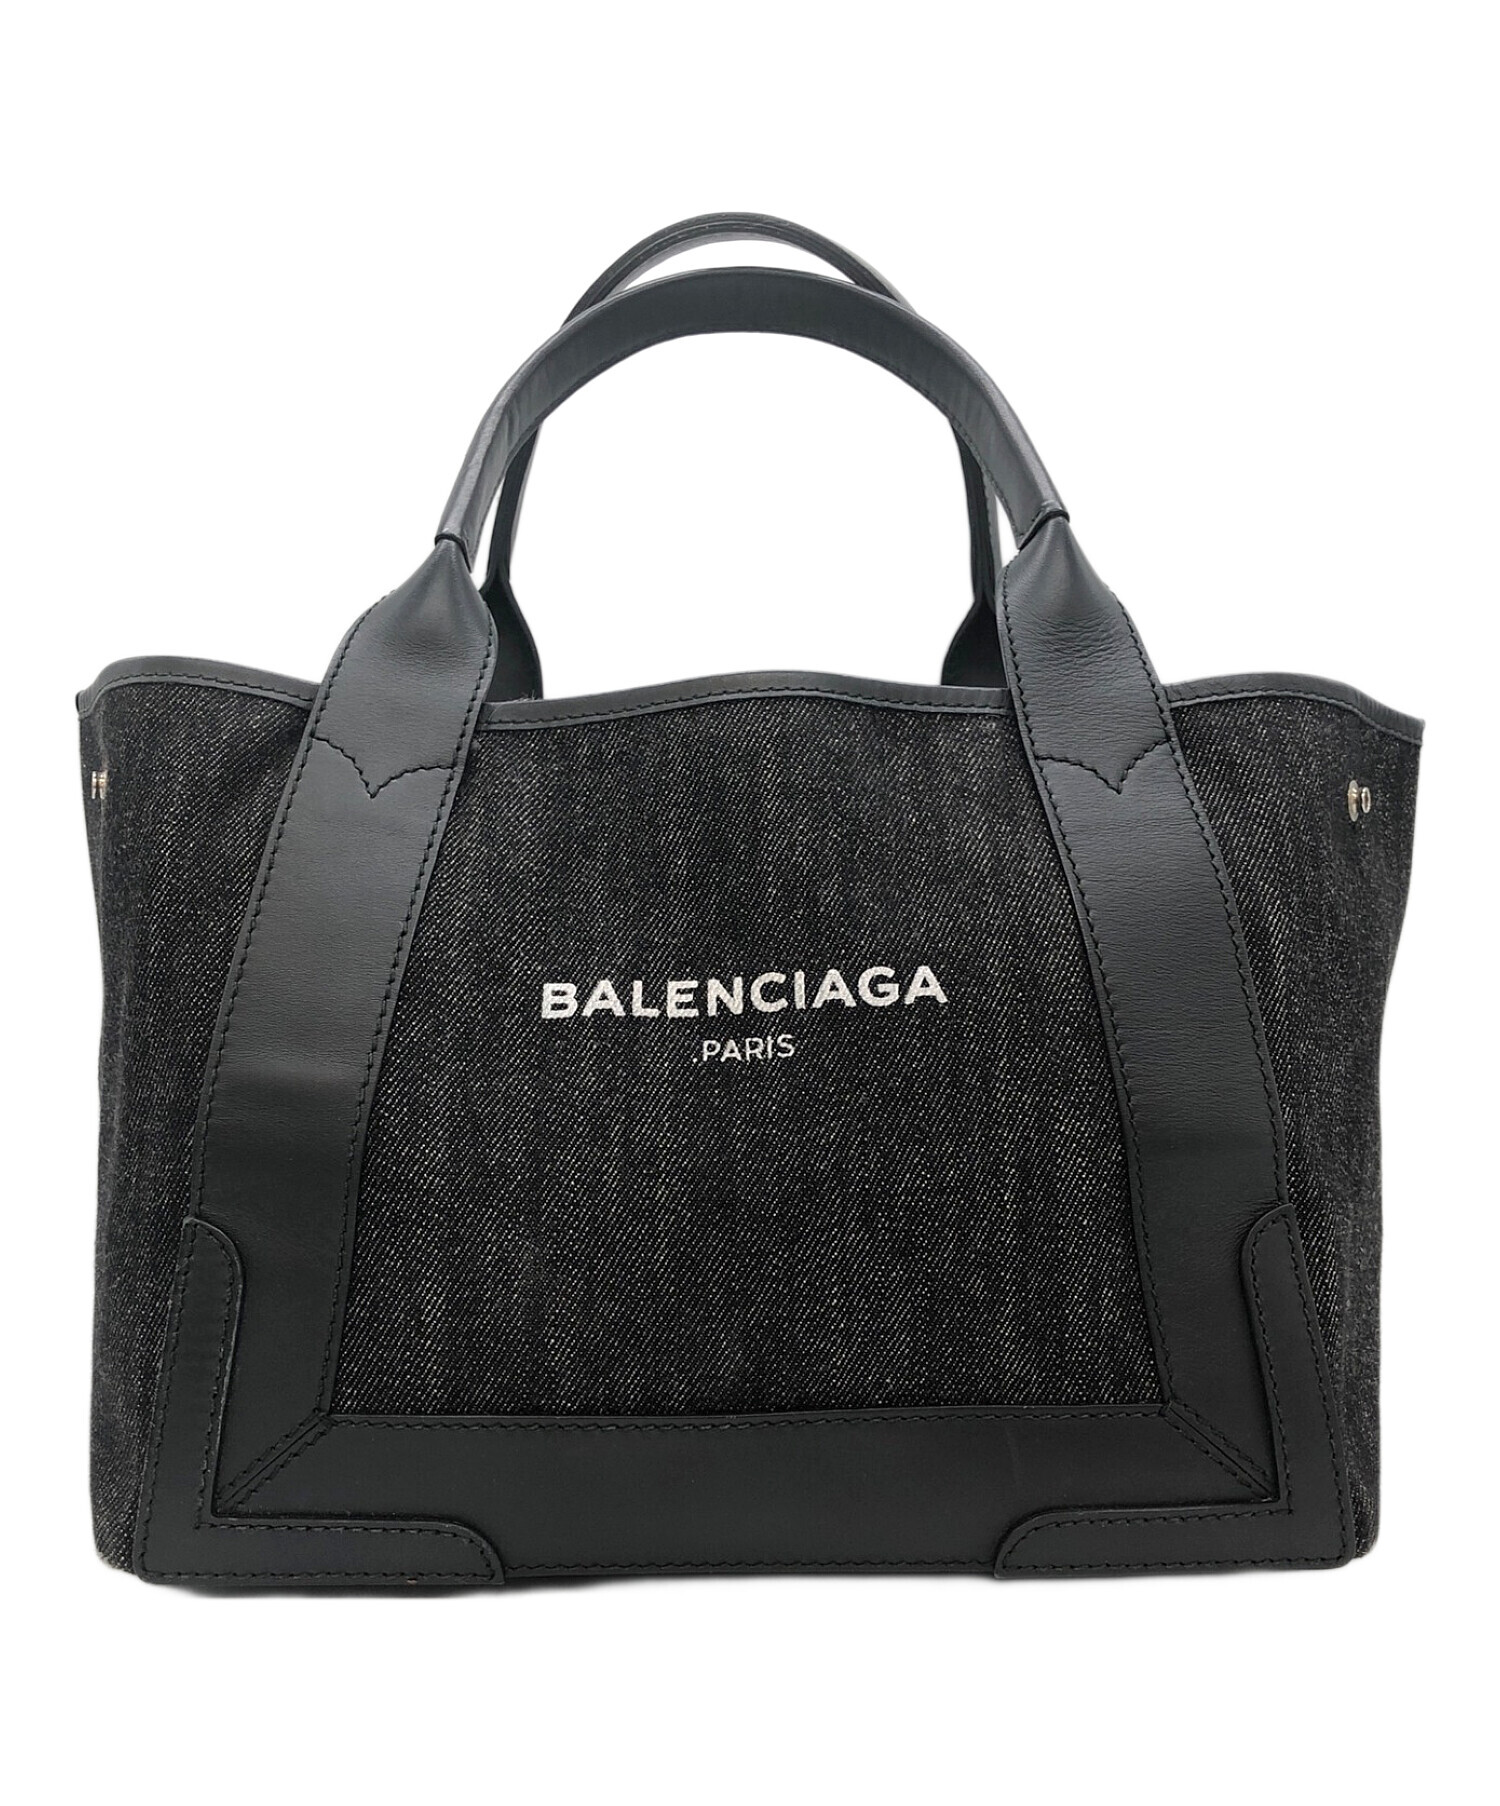 BALENCIAGA (バレンシアガ) キャンバストートバッグ ブラック